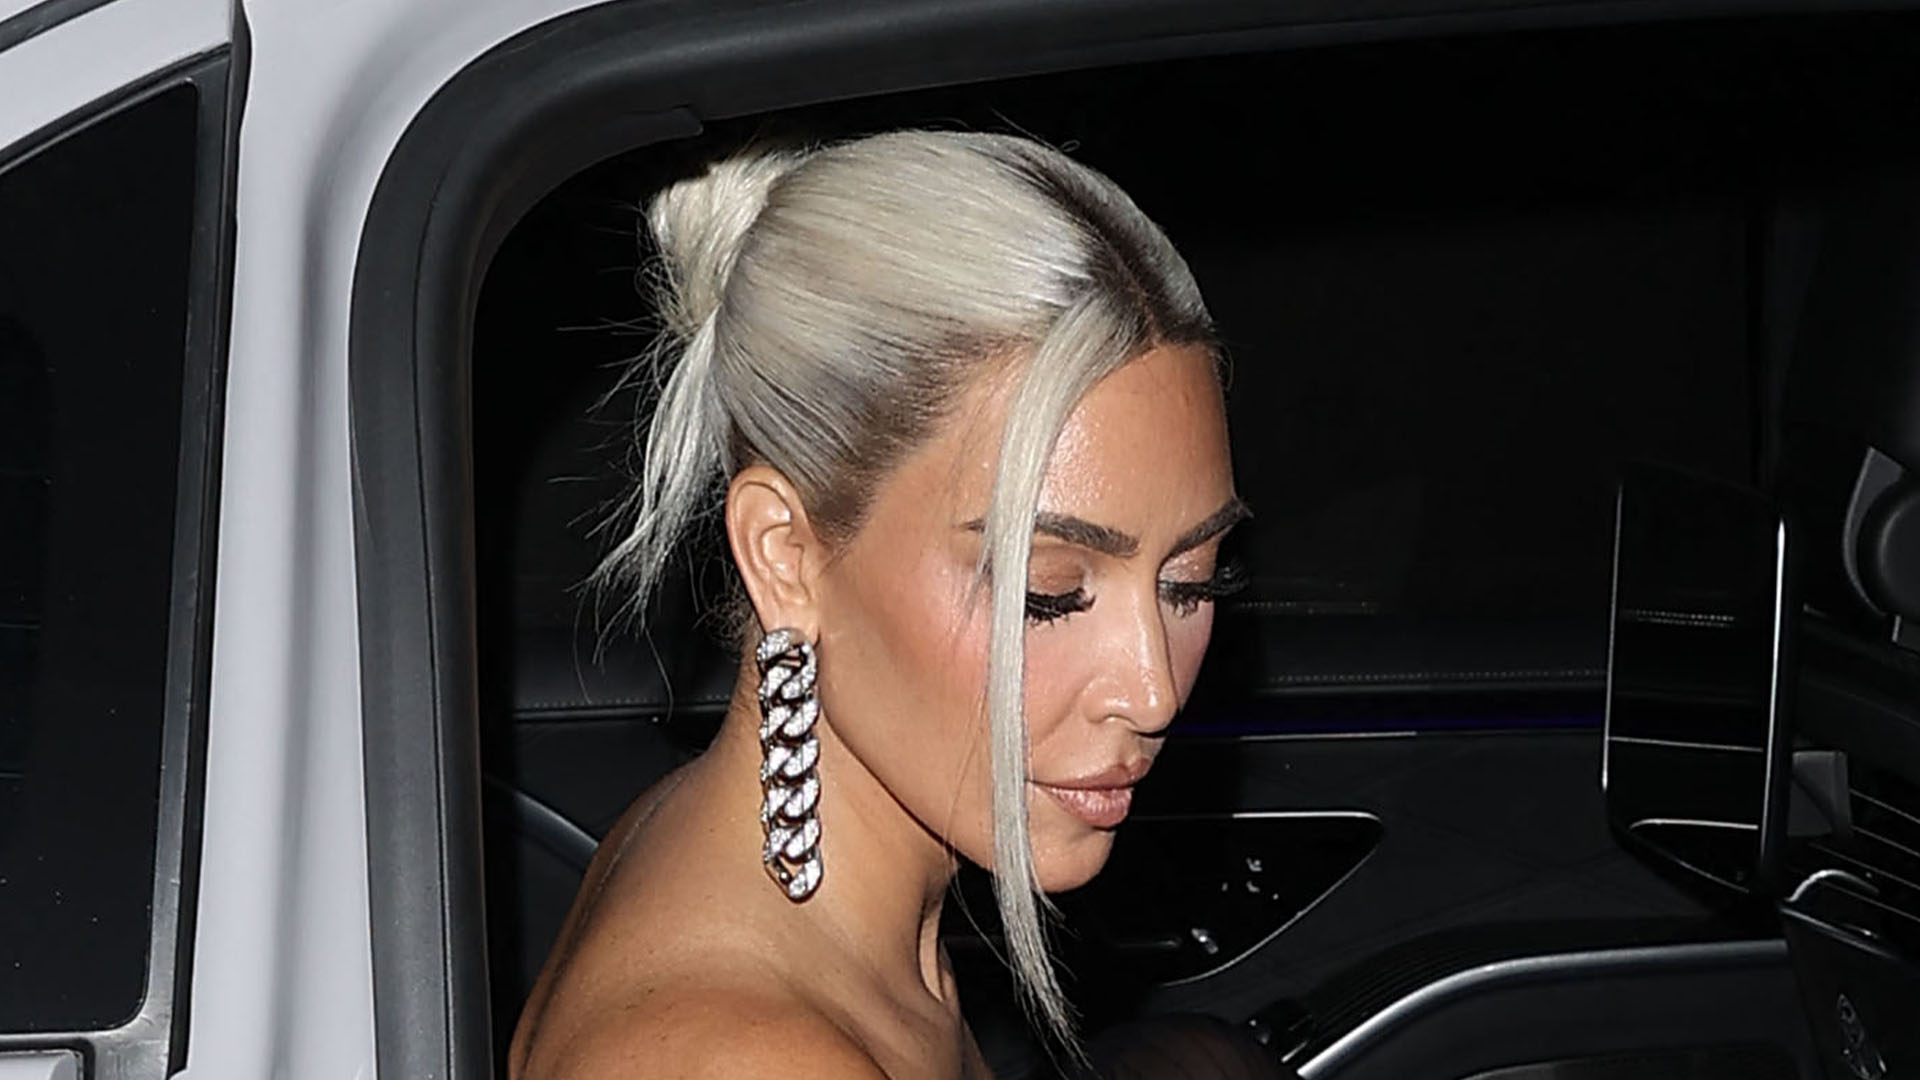 Kim Kardashian Sparks Controversy with Skims Swimwear Photo, Fans Cry Foul on Relevance